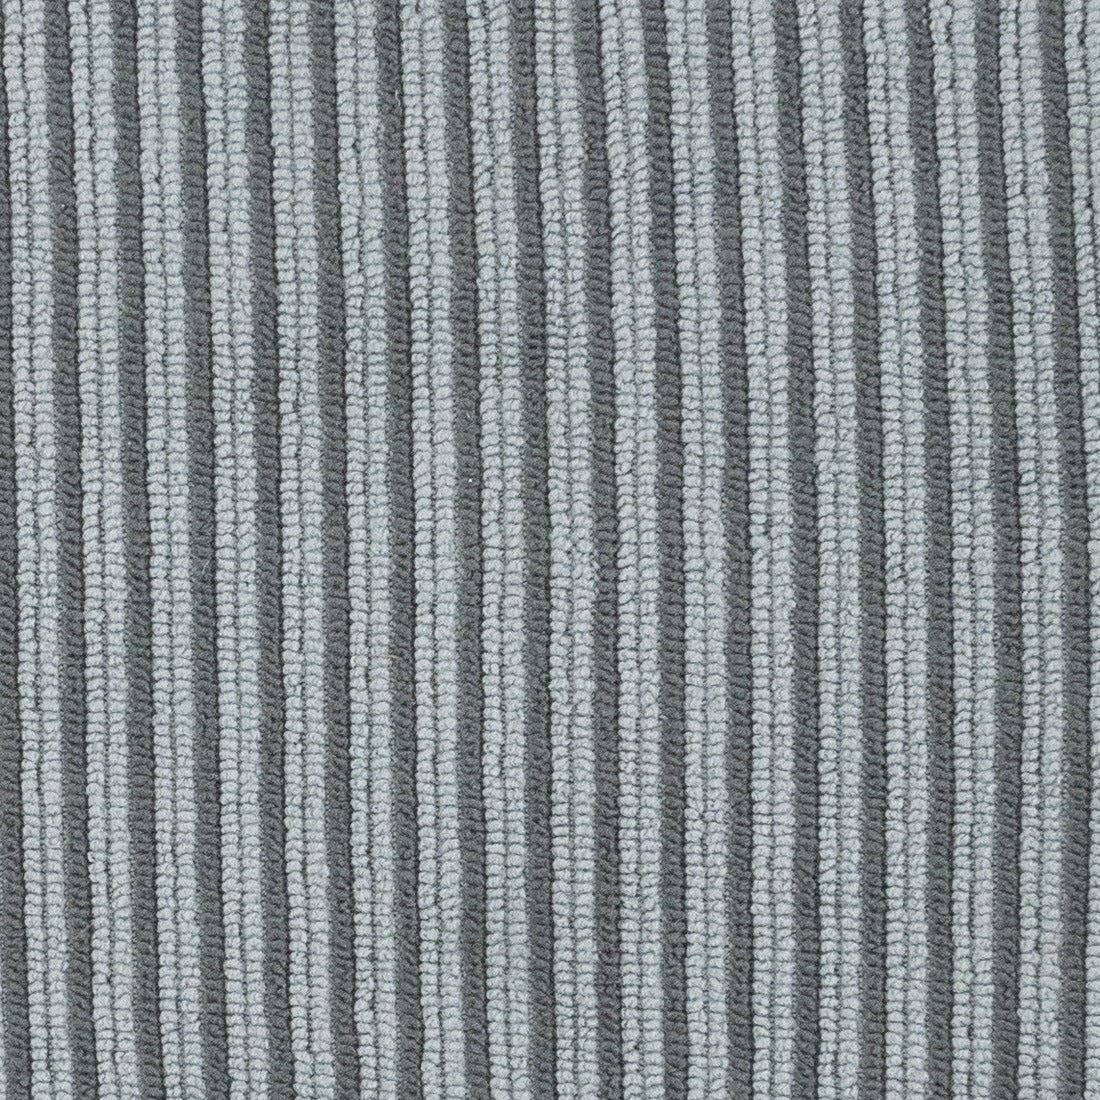 Moerman Bamboo Charcoal Microfiber Cloth - 2 Pack Close Up View